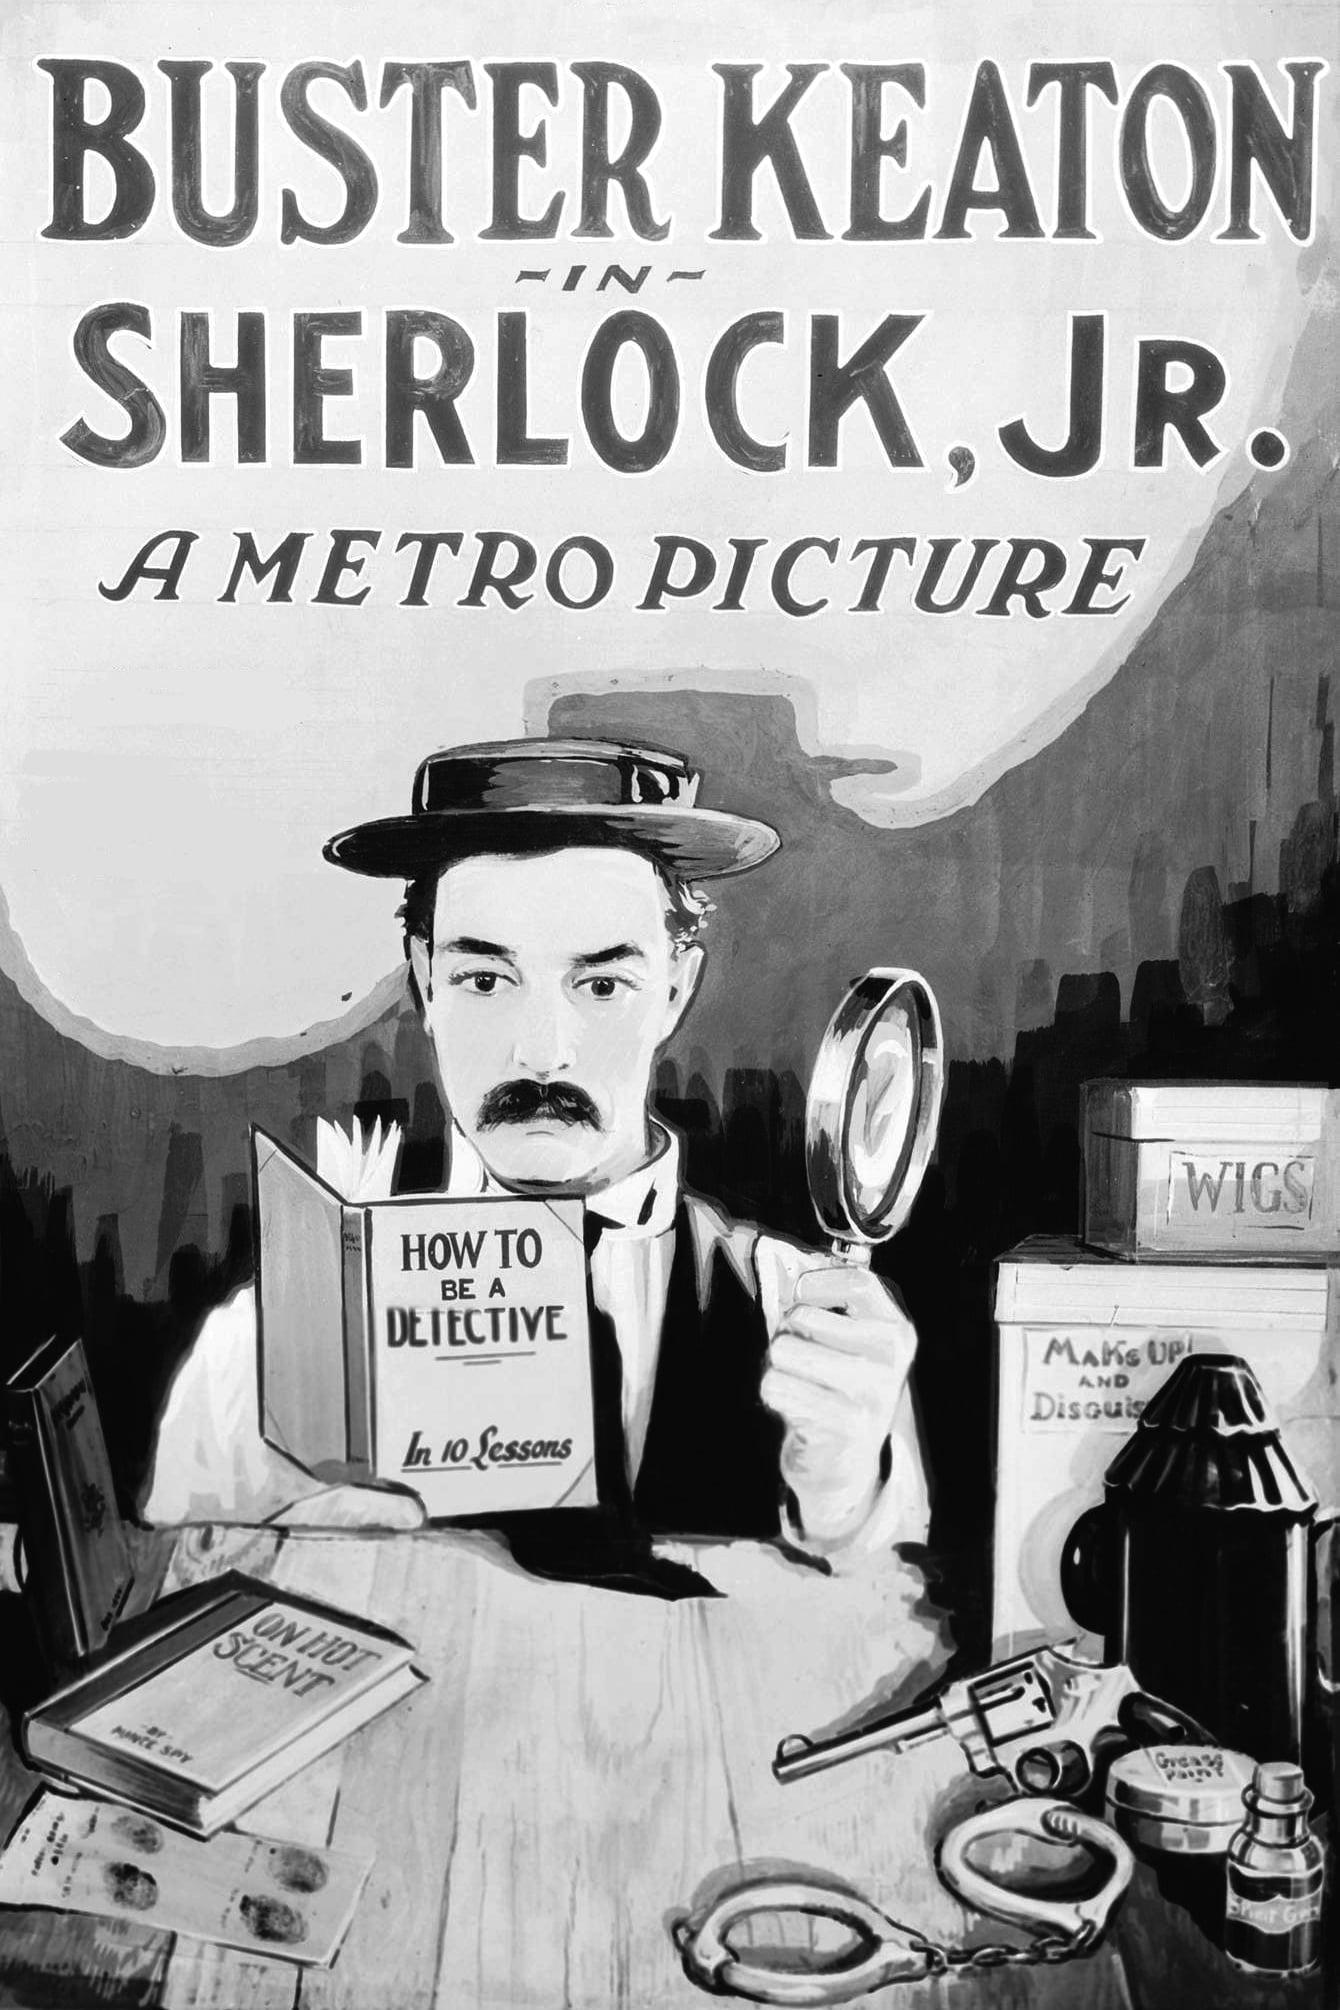 Sherlock Jr. poster